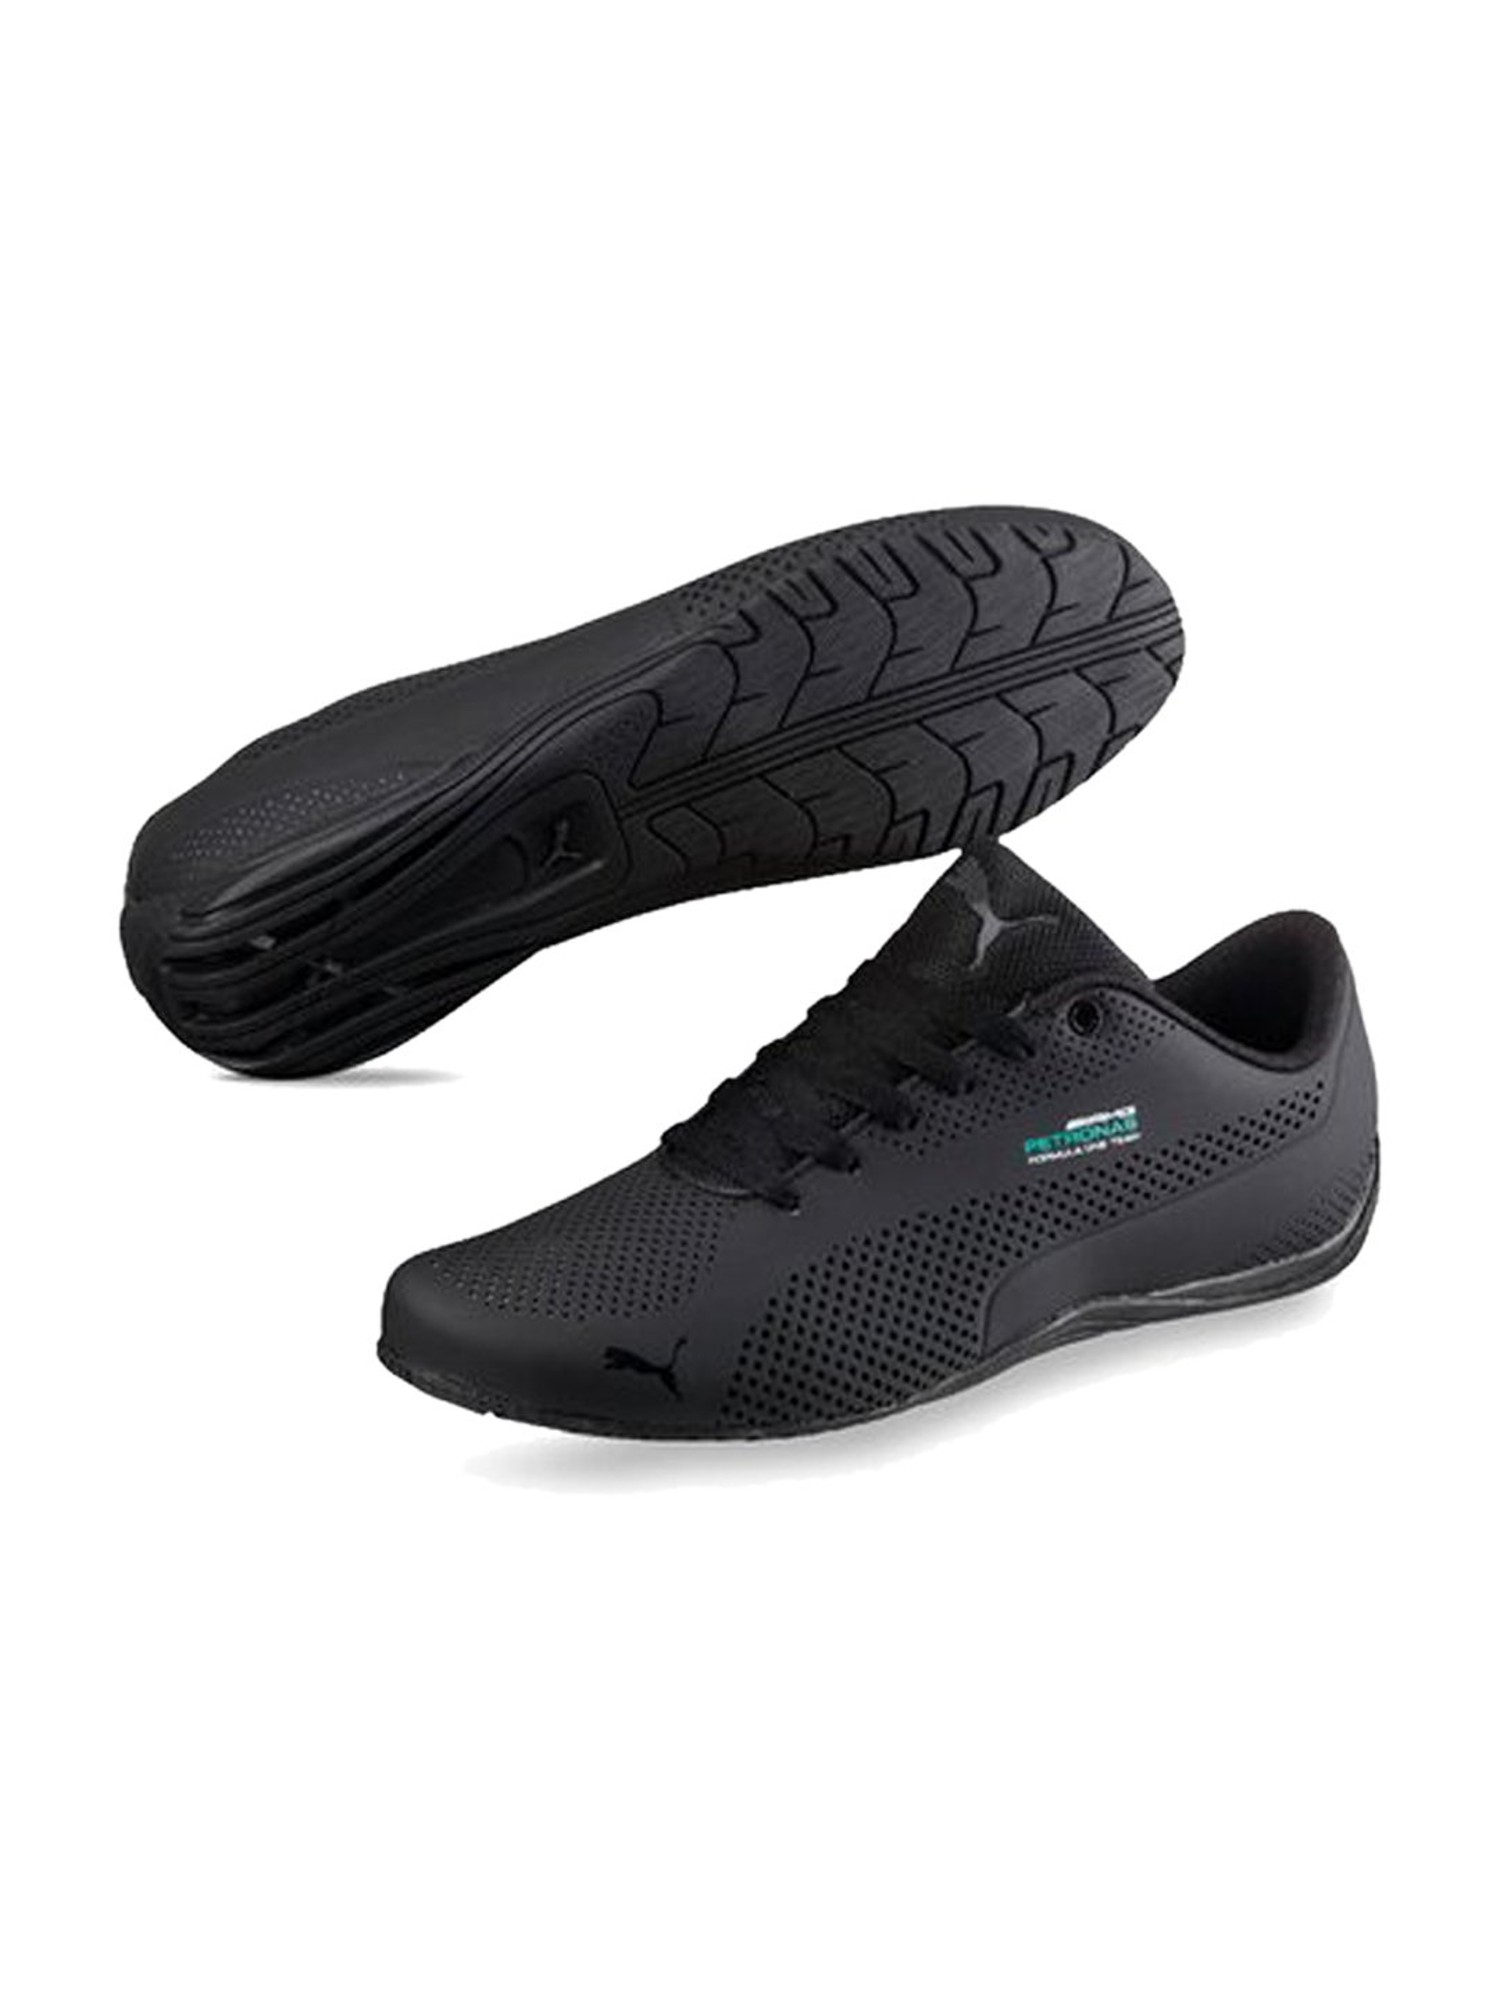 puma mercedes mamgp drift cat ultra black sneakers